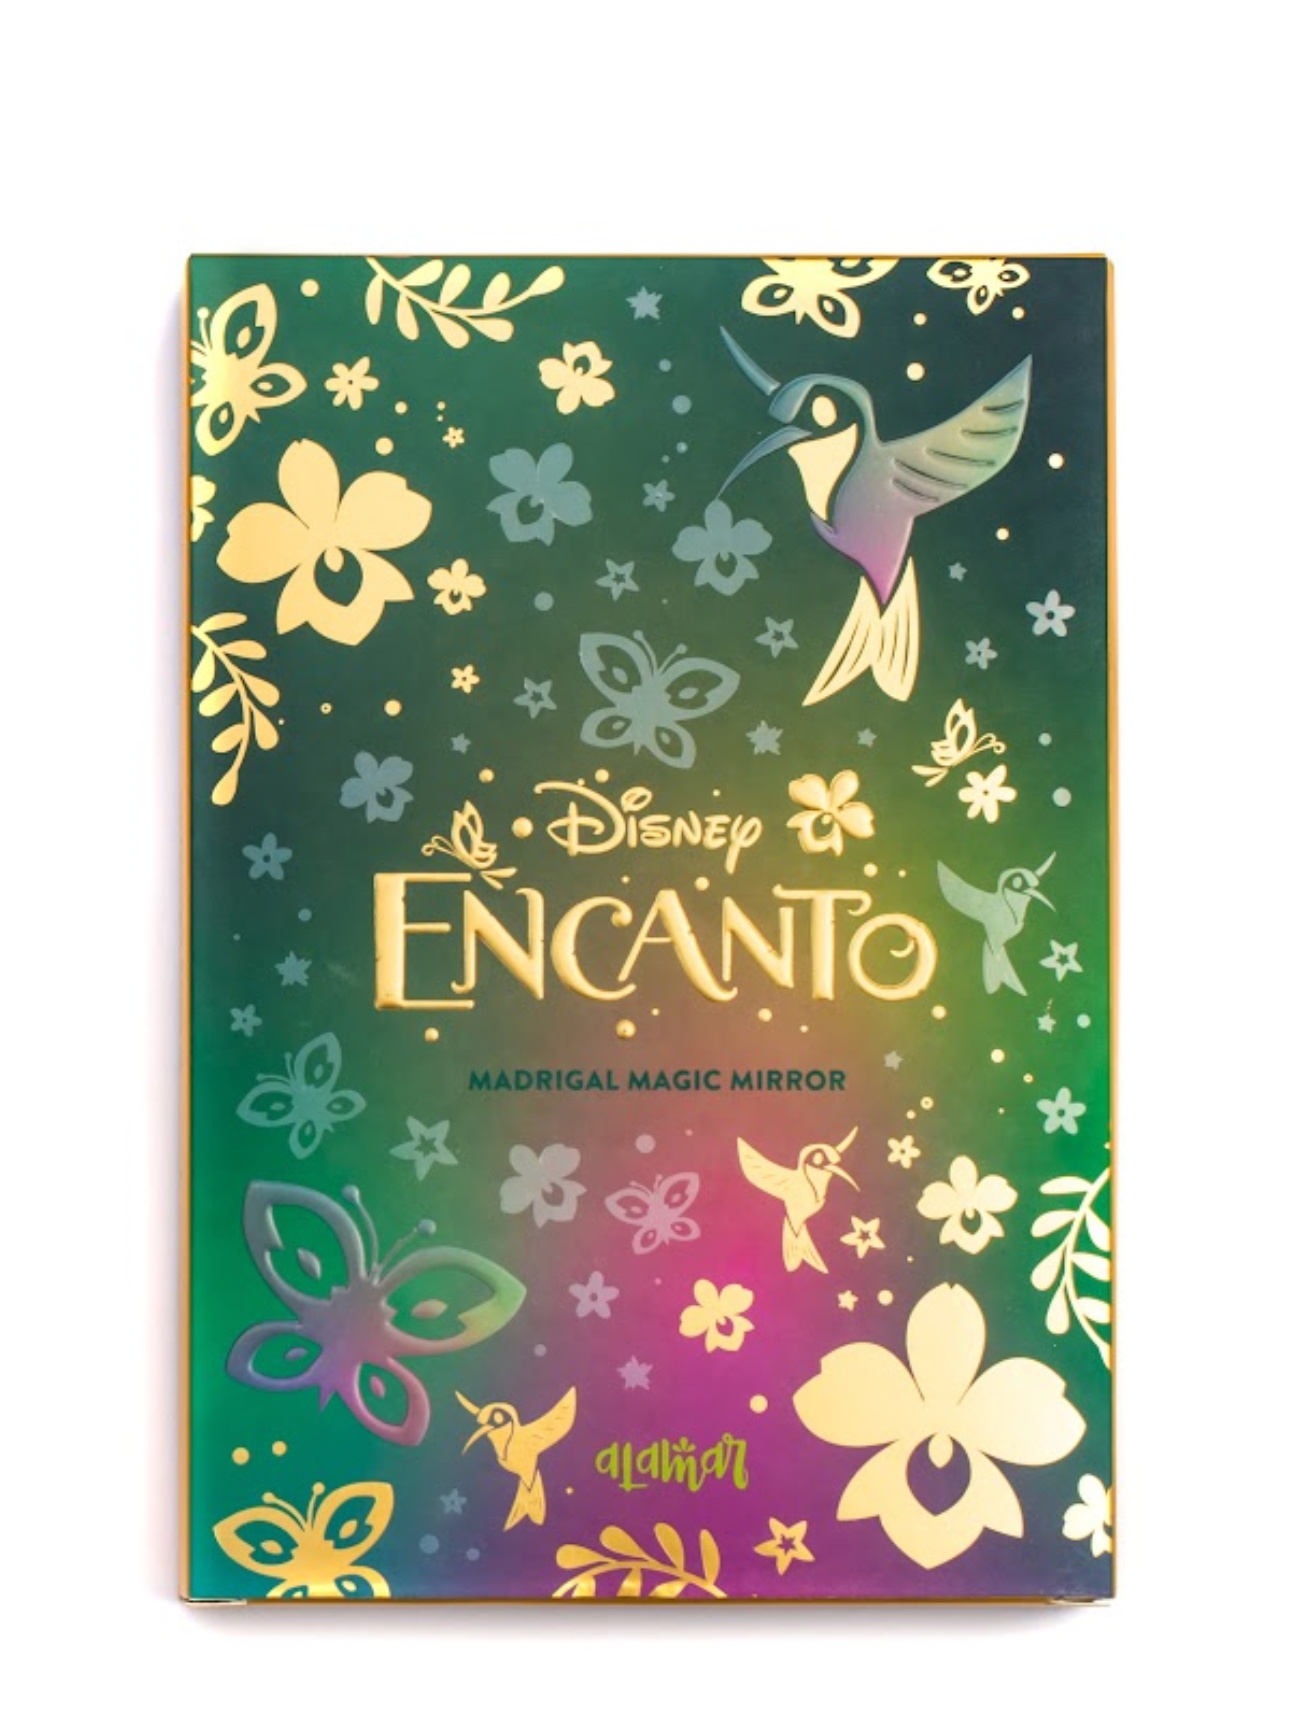 Disney El Encanto Eres Tu Foldable Madrigal Magic Mirror Alamar New with Box